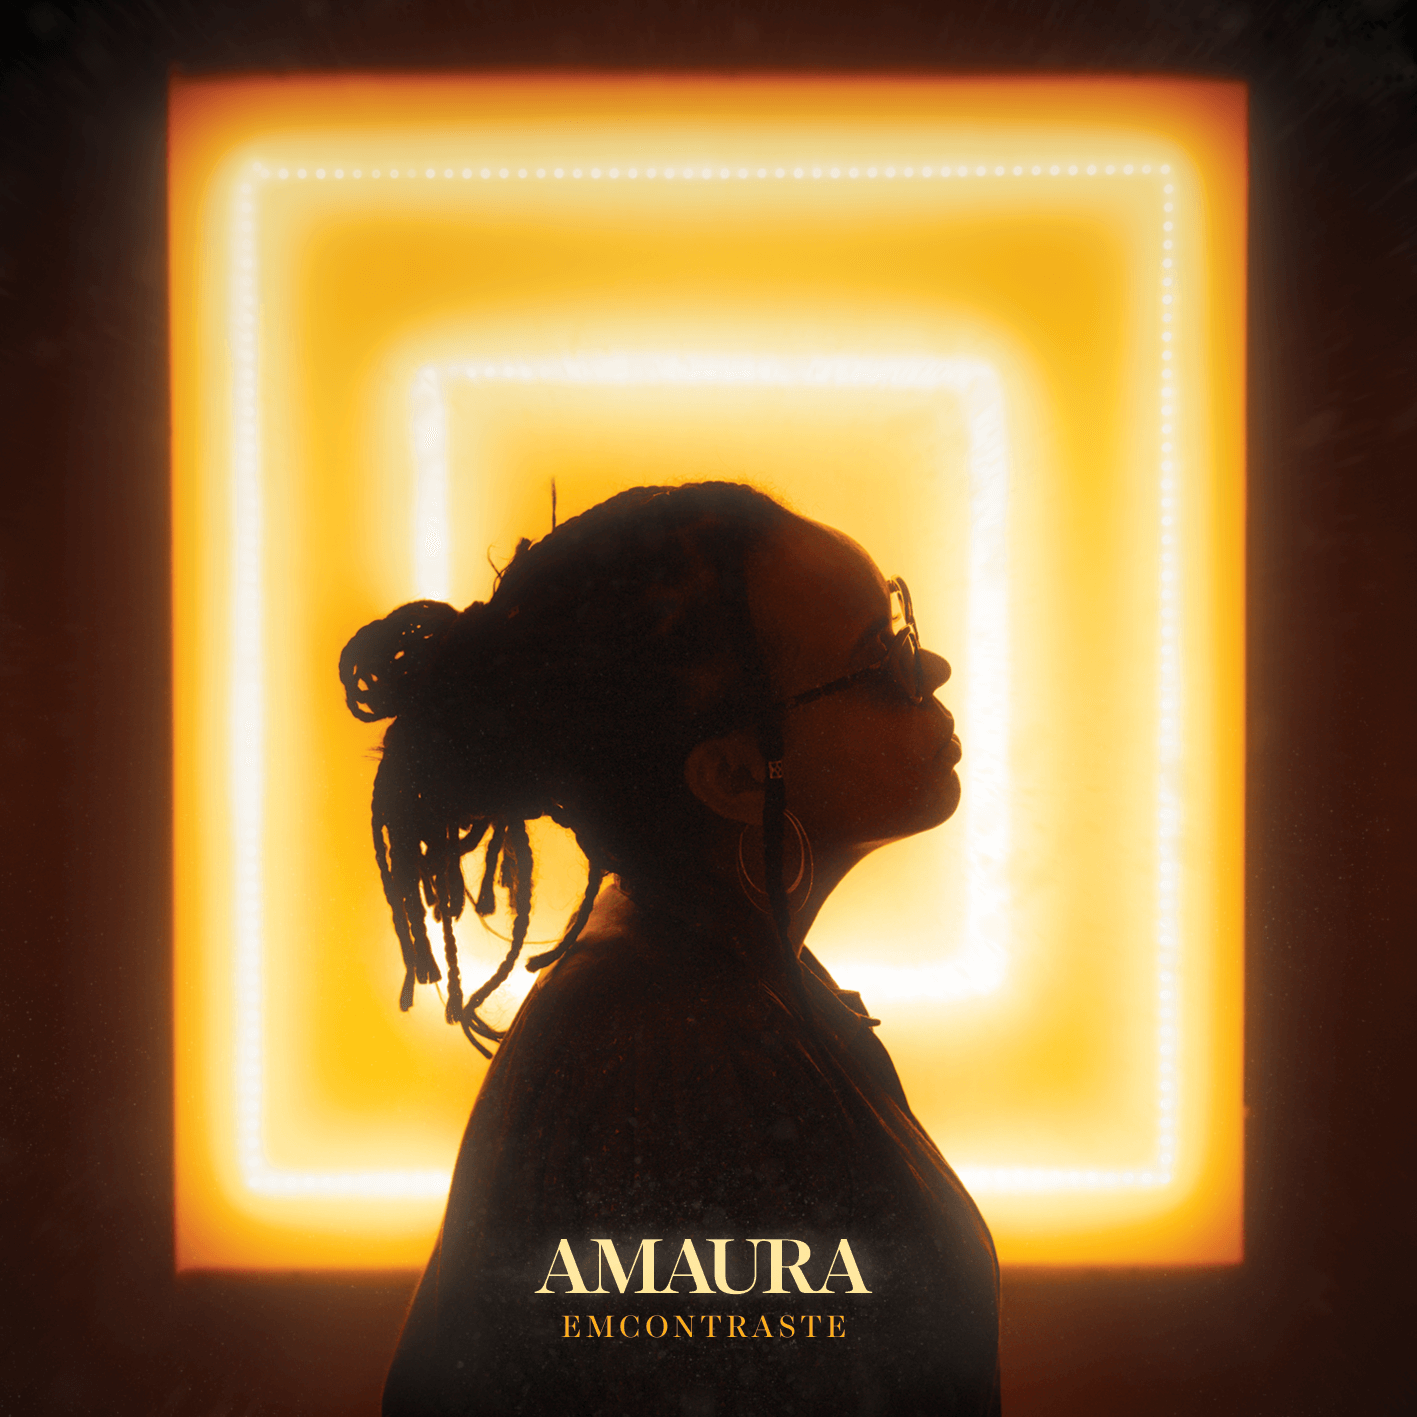 3. AMAURA - mixtape EmContraste